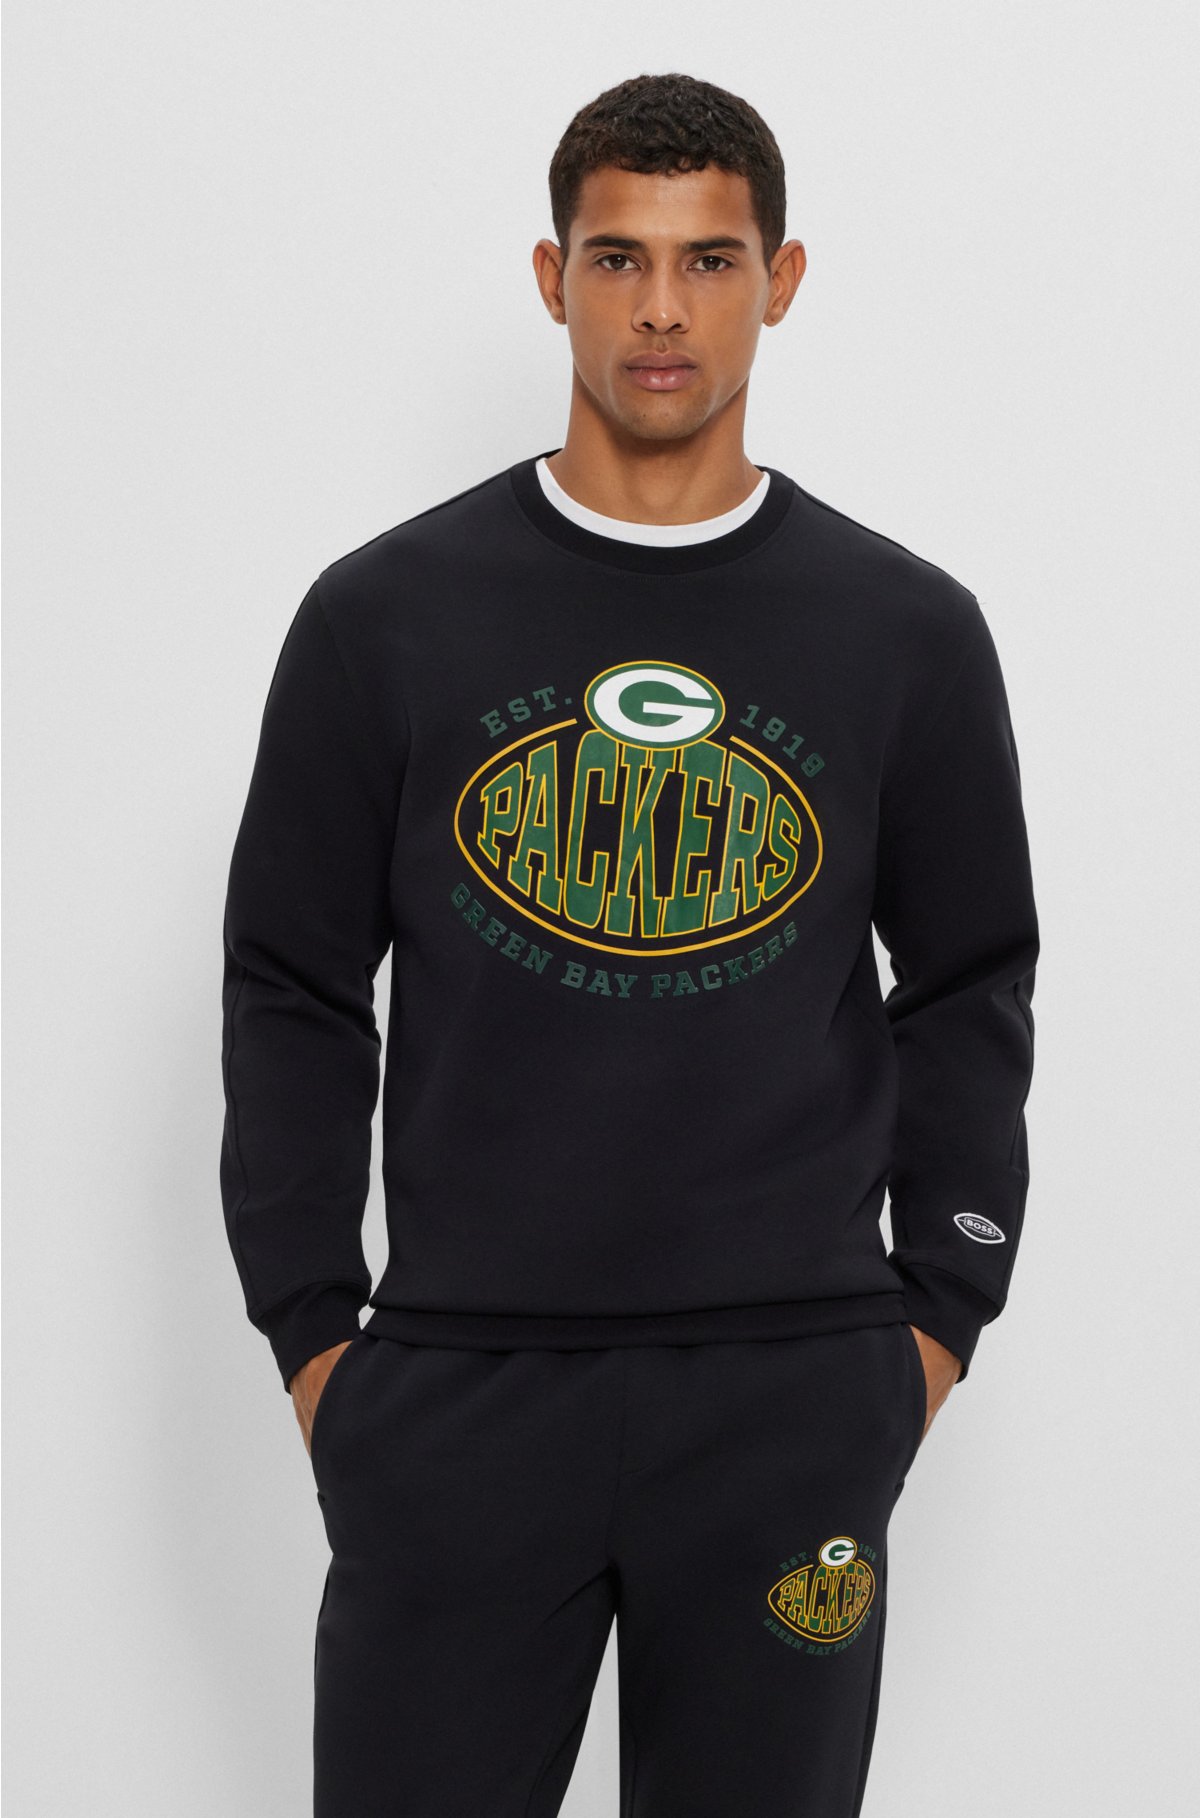 BOSS x NFL cotton-blend sweatshirt with collaborative branding, Packers